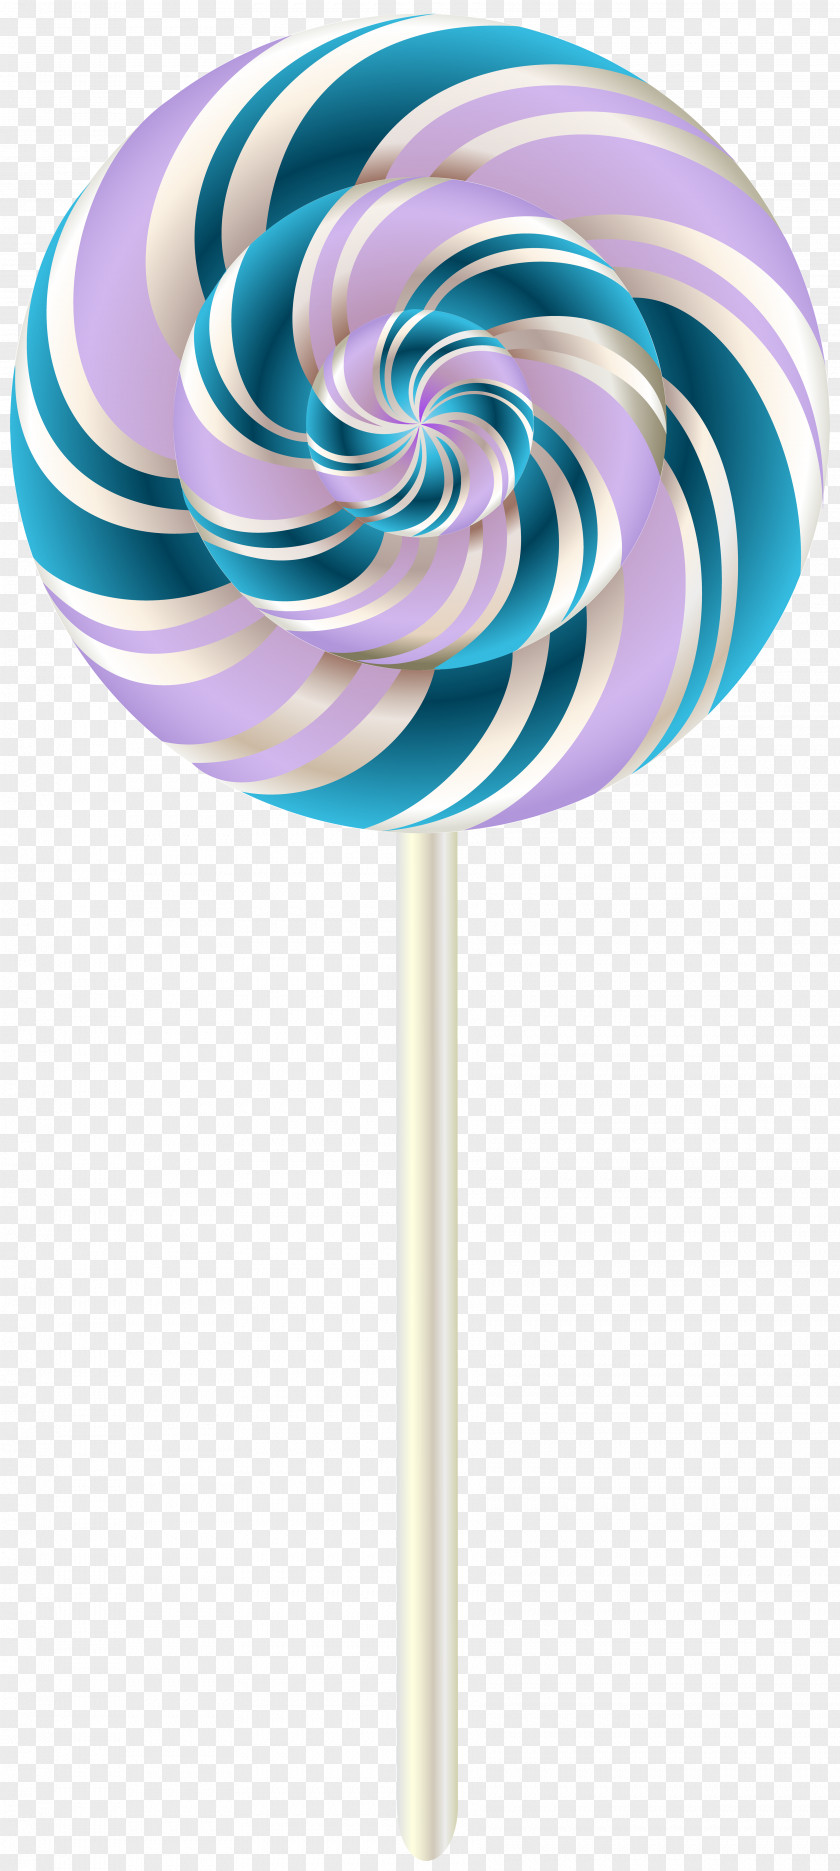 Swirl Lollipop Transparent Clip Art Image Stick Candy PNG